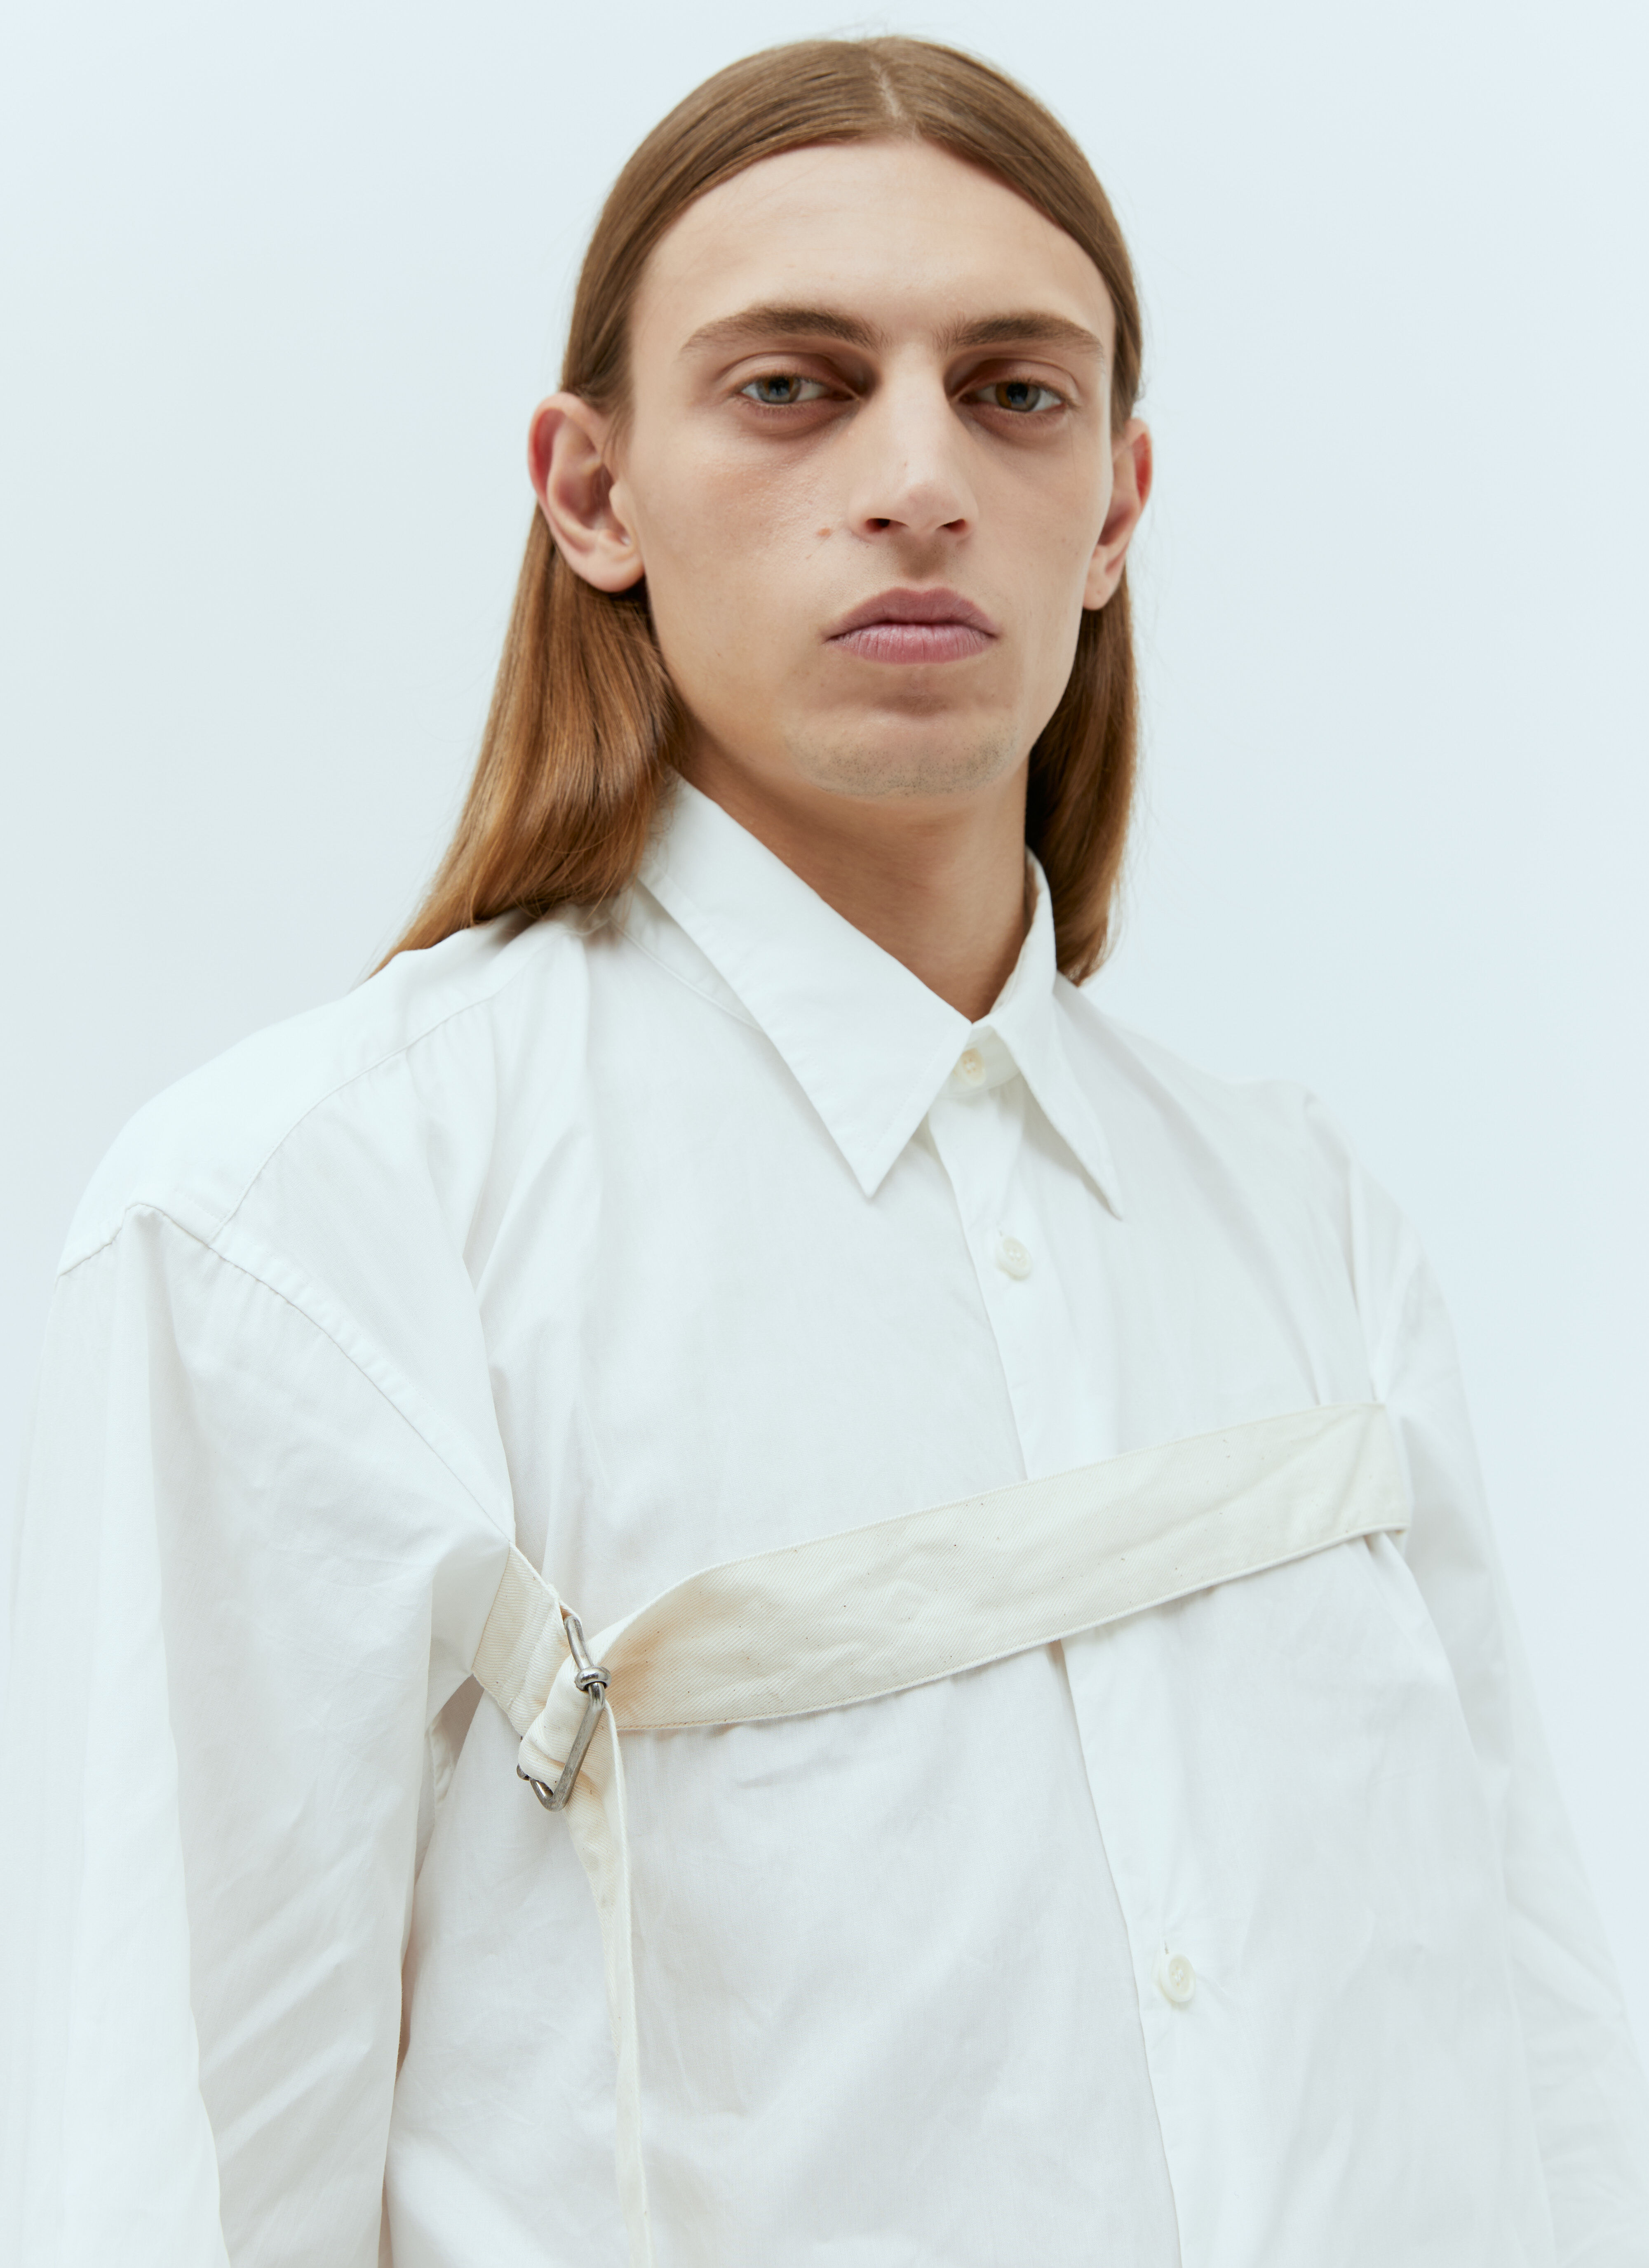 Dries Van Noten Men's Cotton Strap Shirt in White | LN-CC®